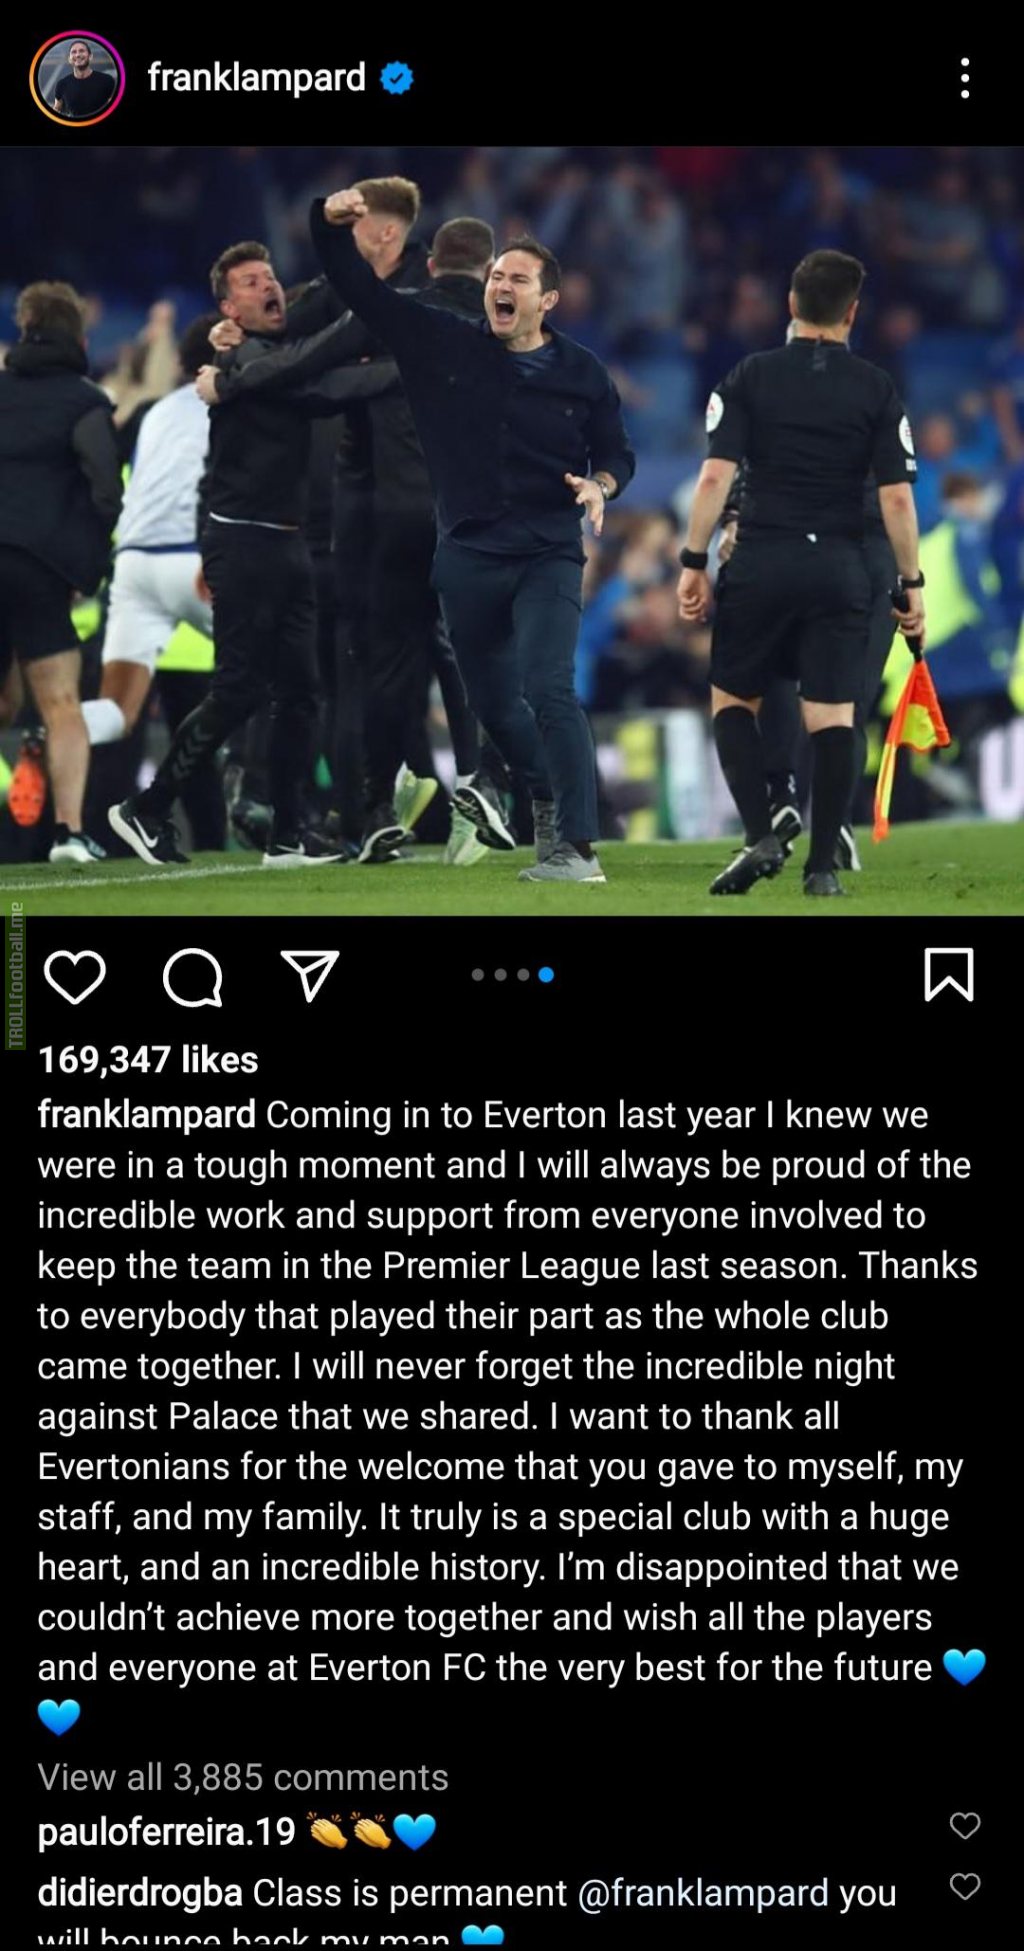 Frank Lampard On Instagram After Everton Job